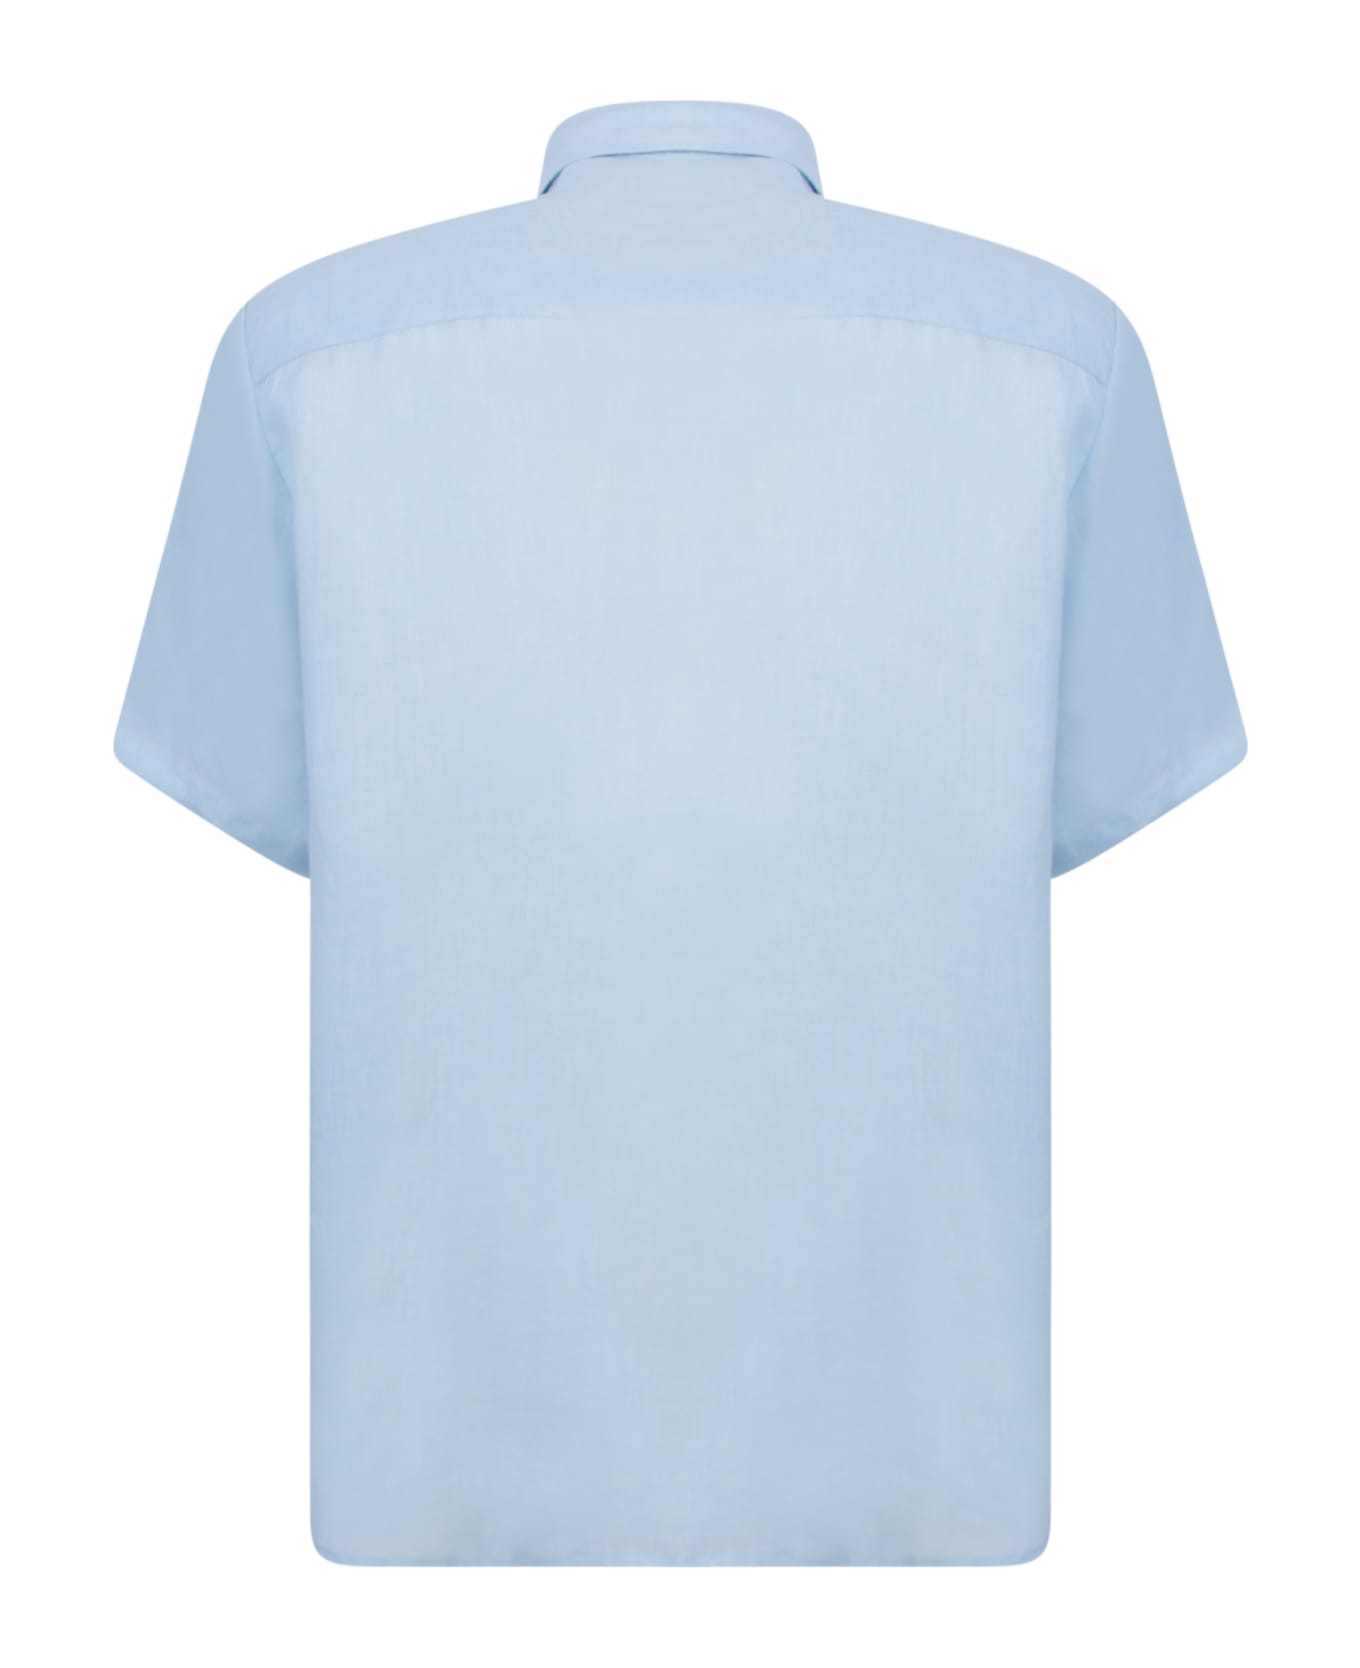 A.P.C. Bellini Shirt - Light Blue シャツ